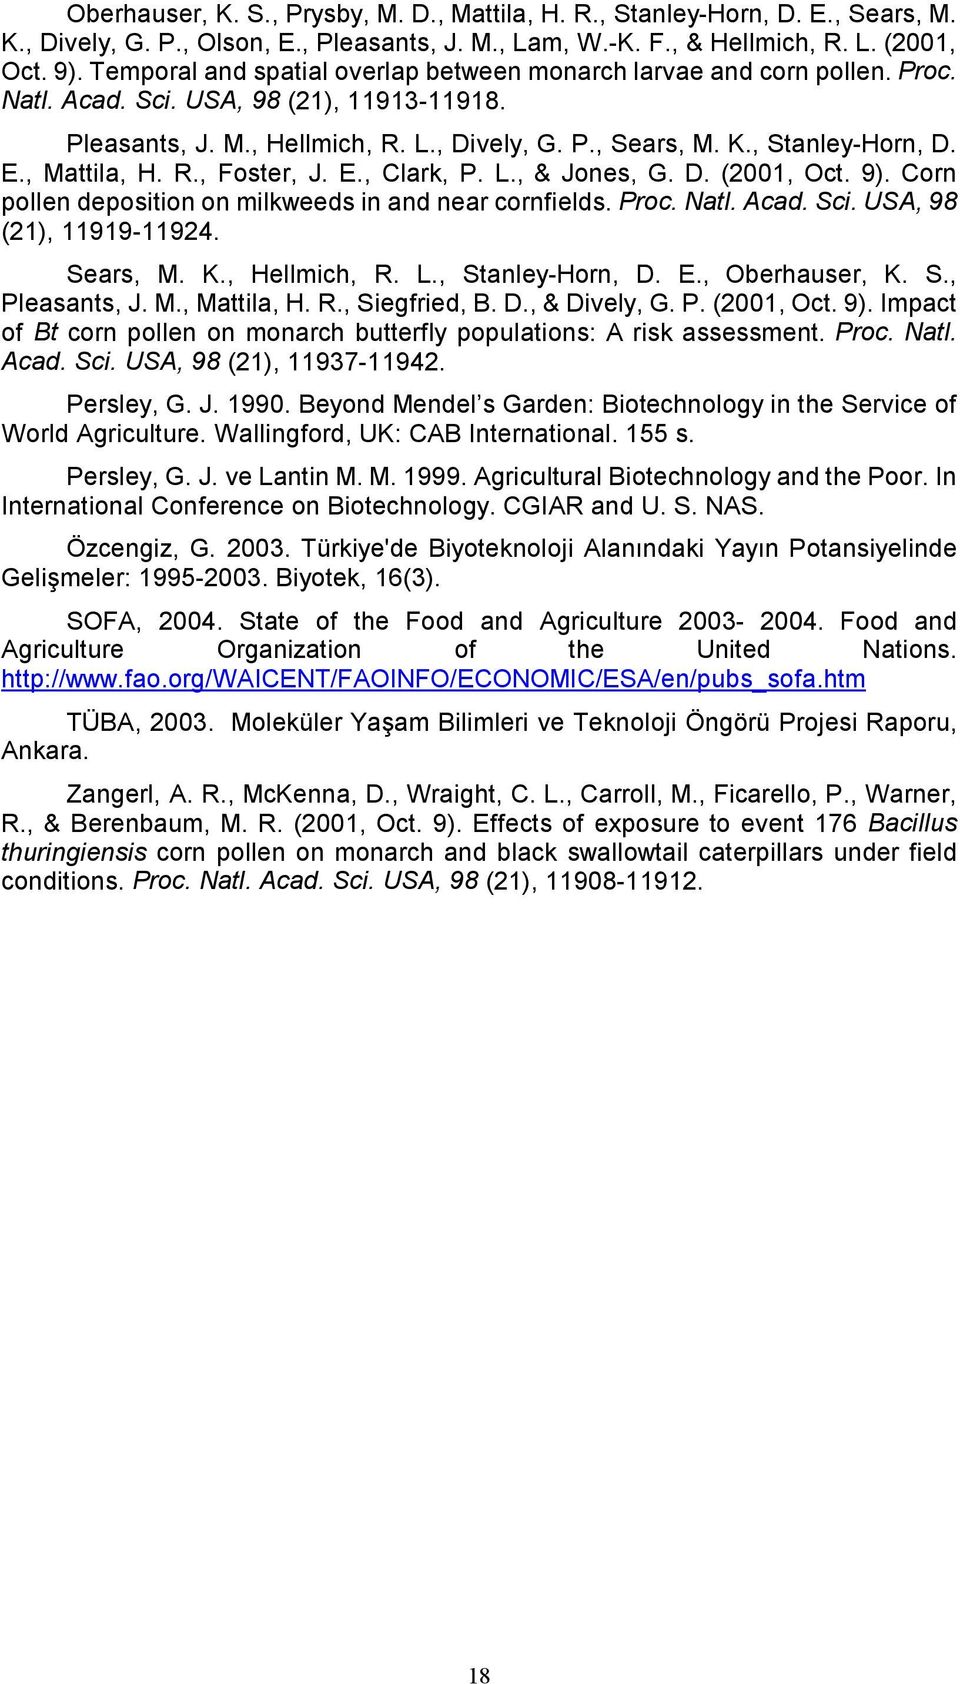 E., Mattila, H. R., Foster, J. E., Clark, P. L., & Jones, G. D. (2001, Oct. 9). Corn pollen deposition on milkweeds in and near cornfields. Proc. Natl. Acad. Sci. USA, 98 (21), 11919-11924. Sears, M.